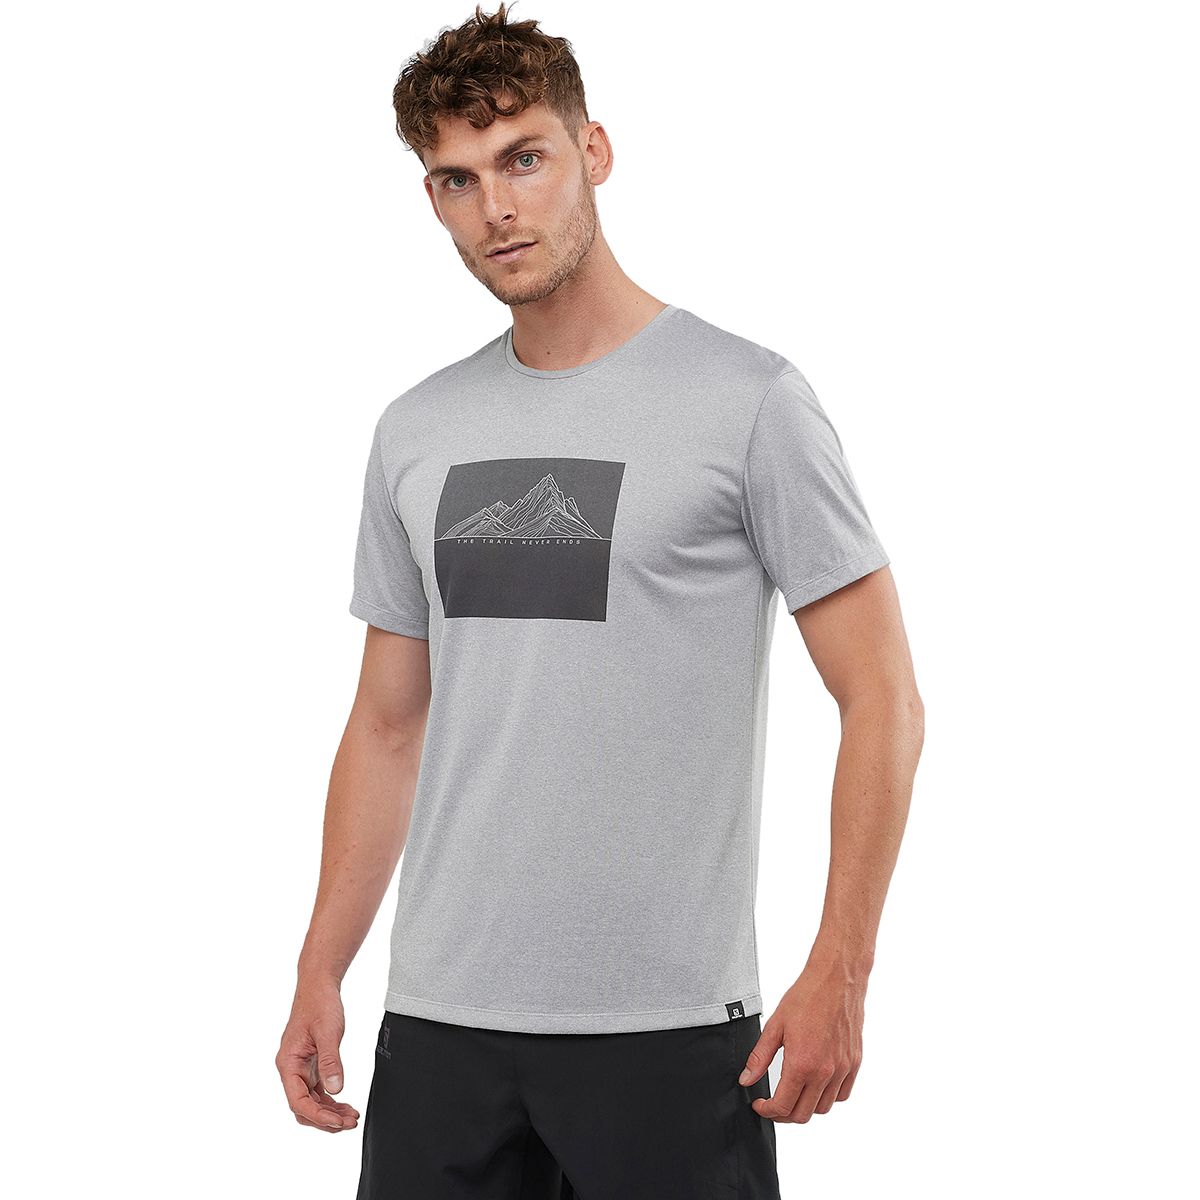 Salomon Agile Graphic T-Shirt - Men's - Clothing